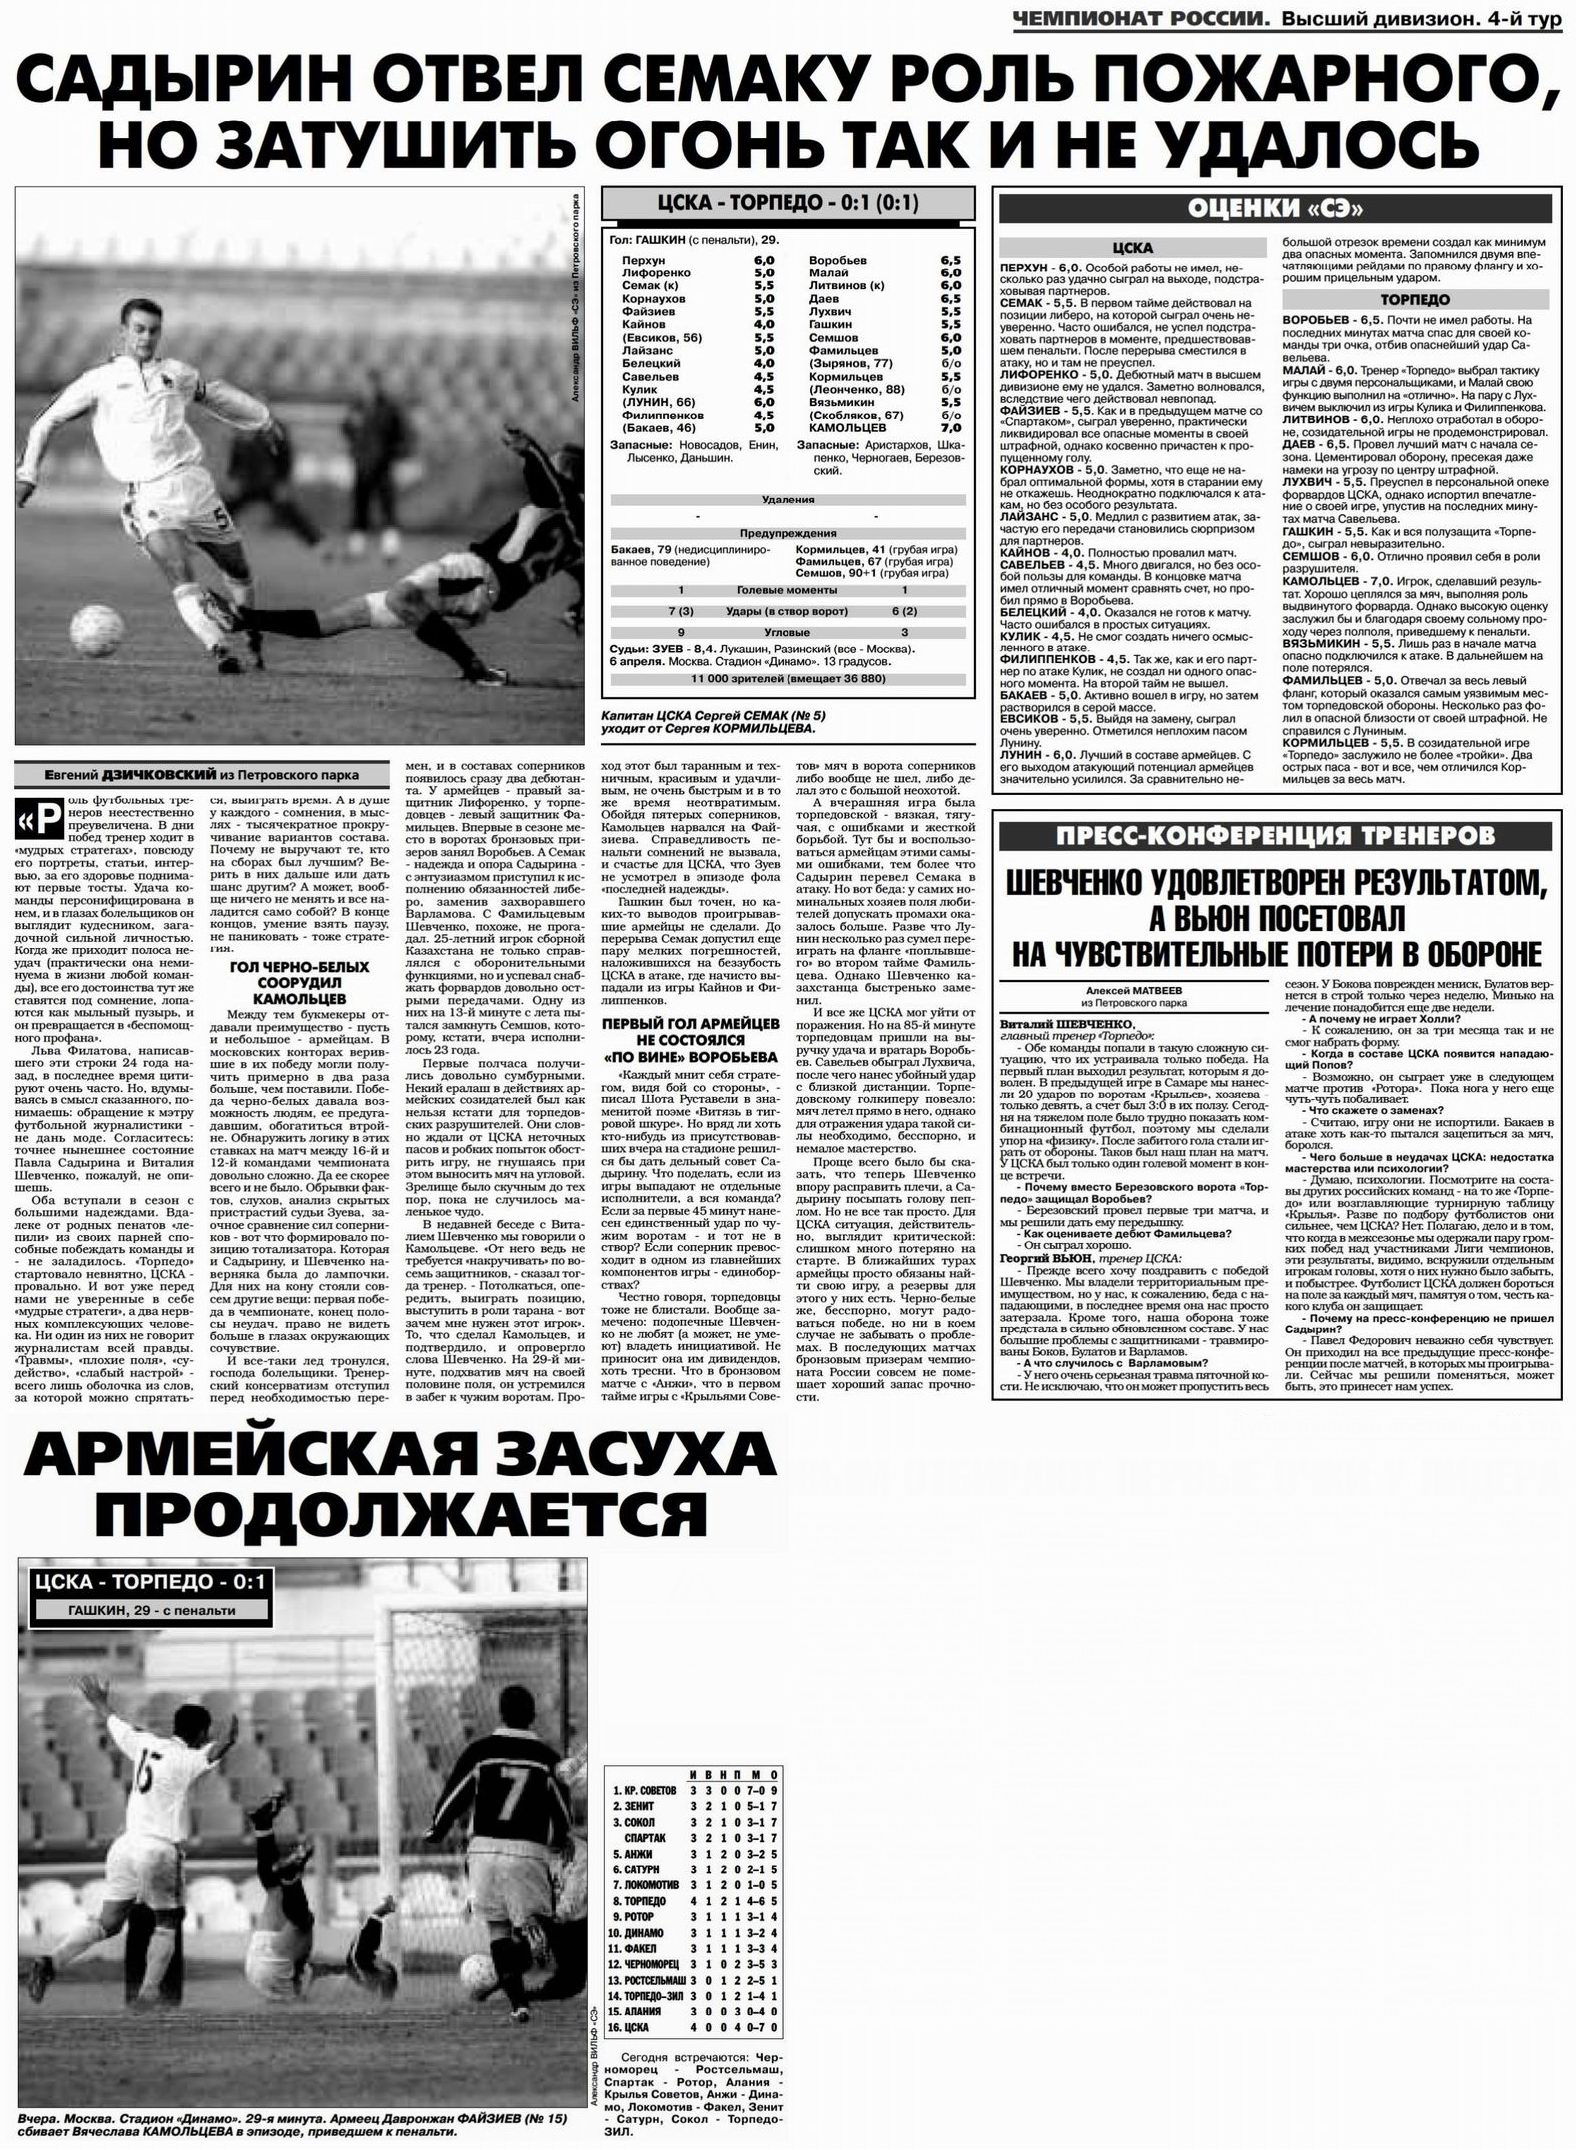 2001-04-06.CSKA-TorpedoM